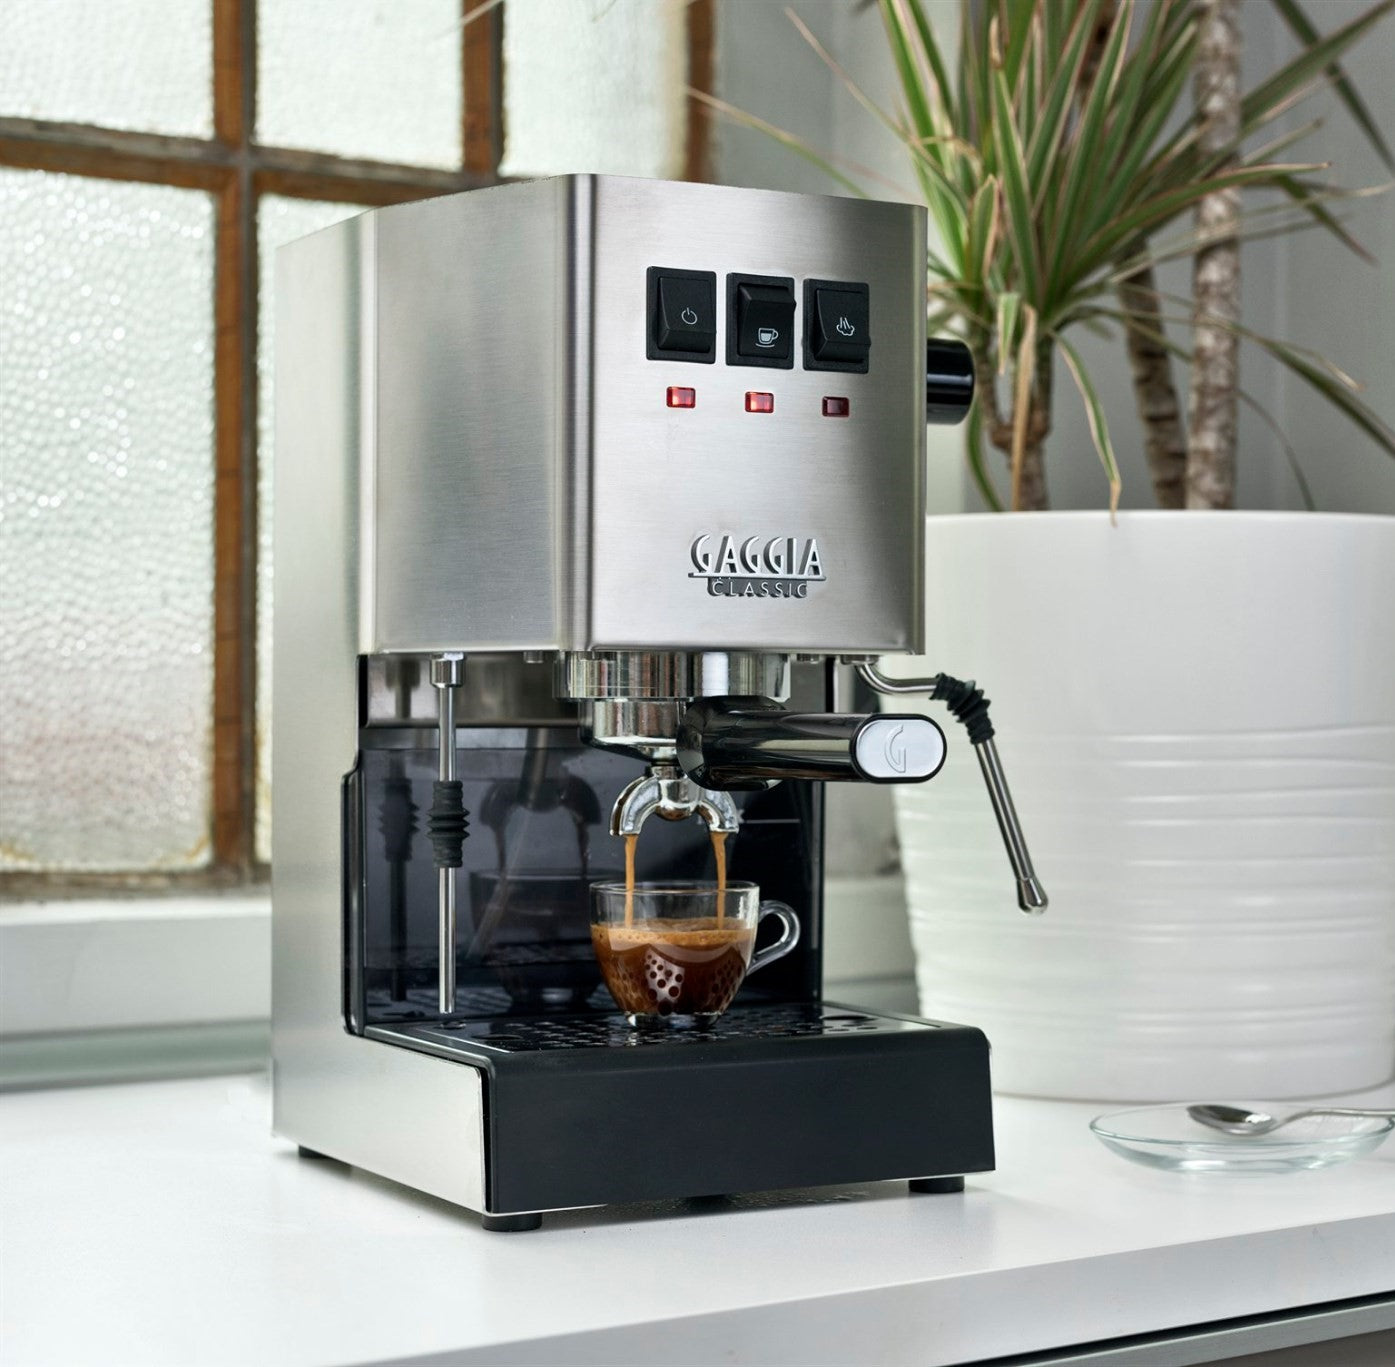 Cafetera espresso Ariete Moderna con molinillo de café integrado